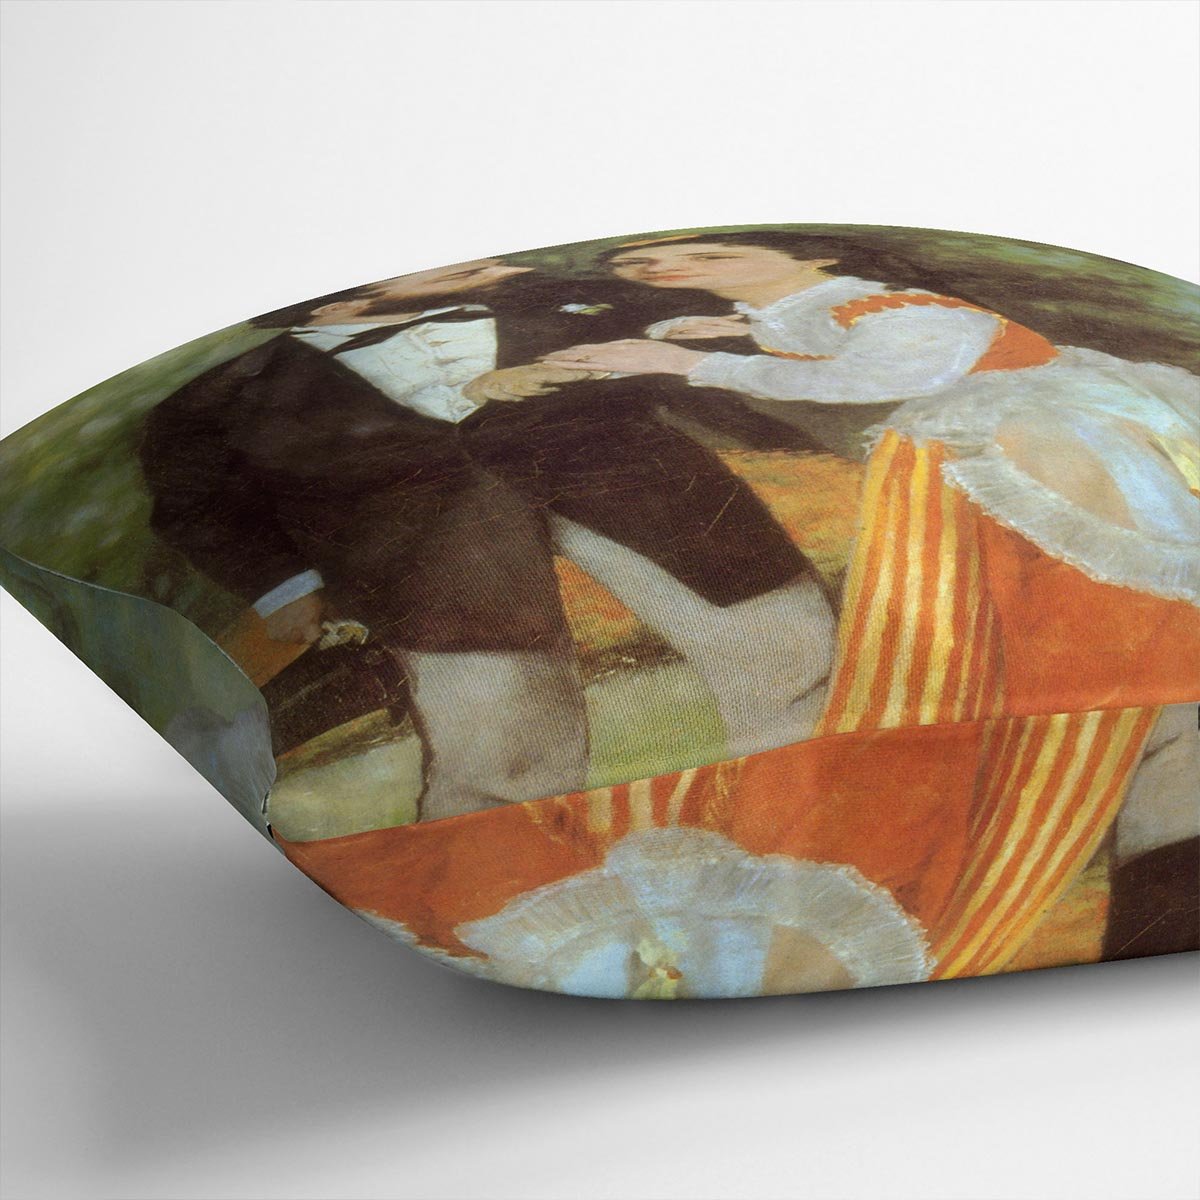 Alfred Sisley by Renoir Throw Pillow